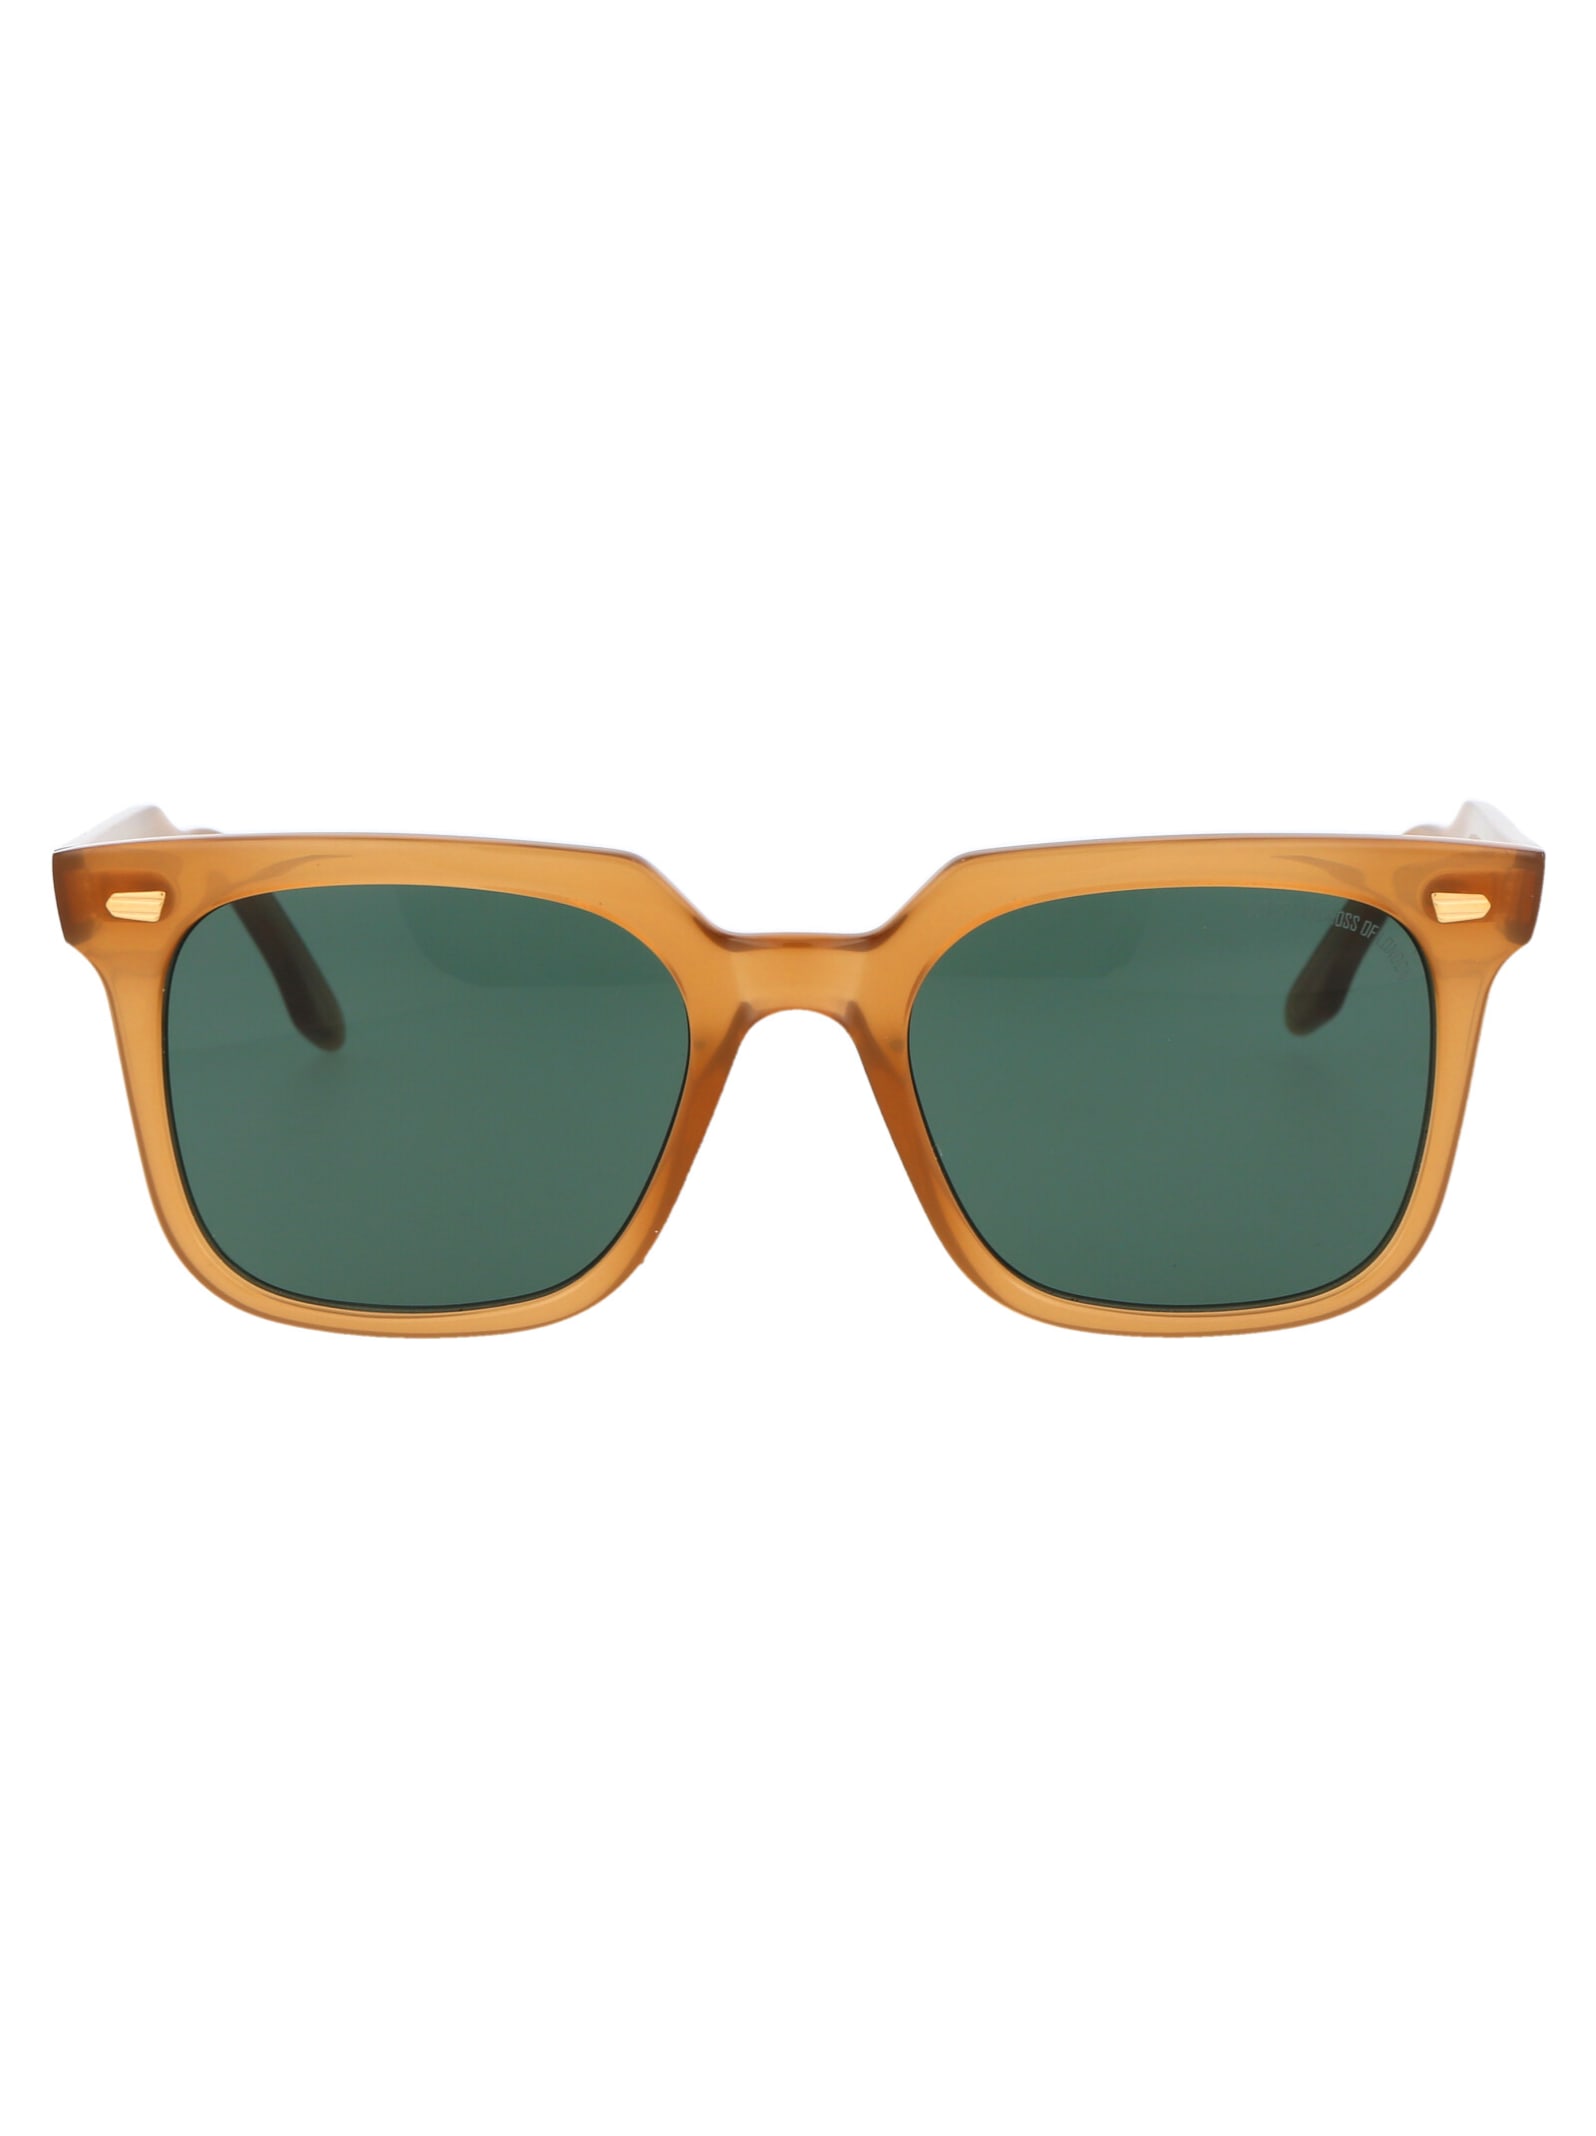 Cutler and Gross 1387 Sunglasses